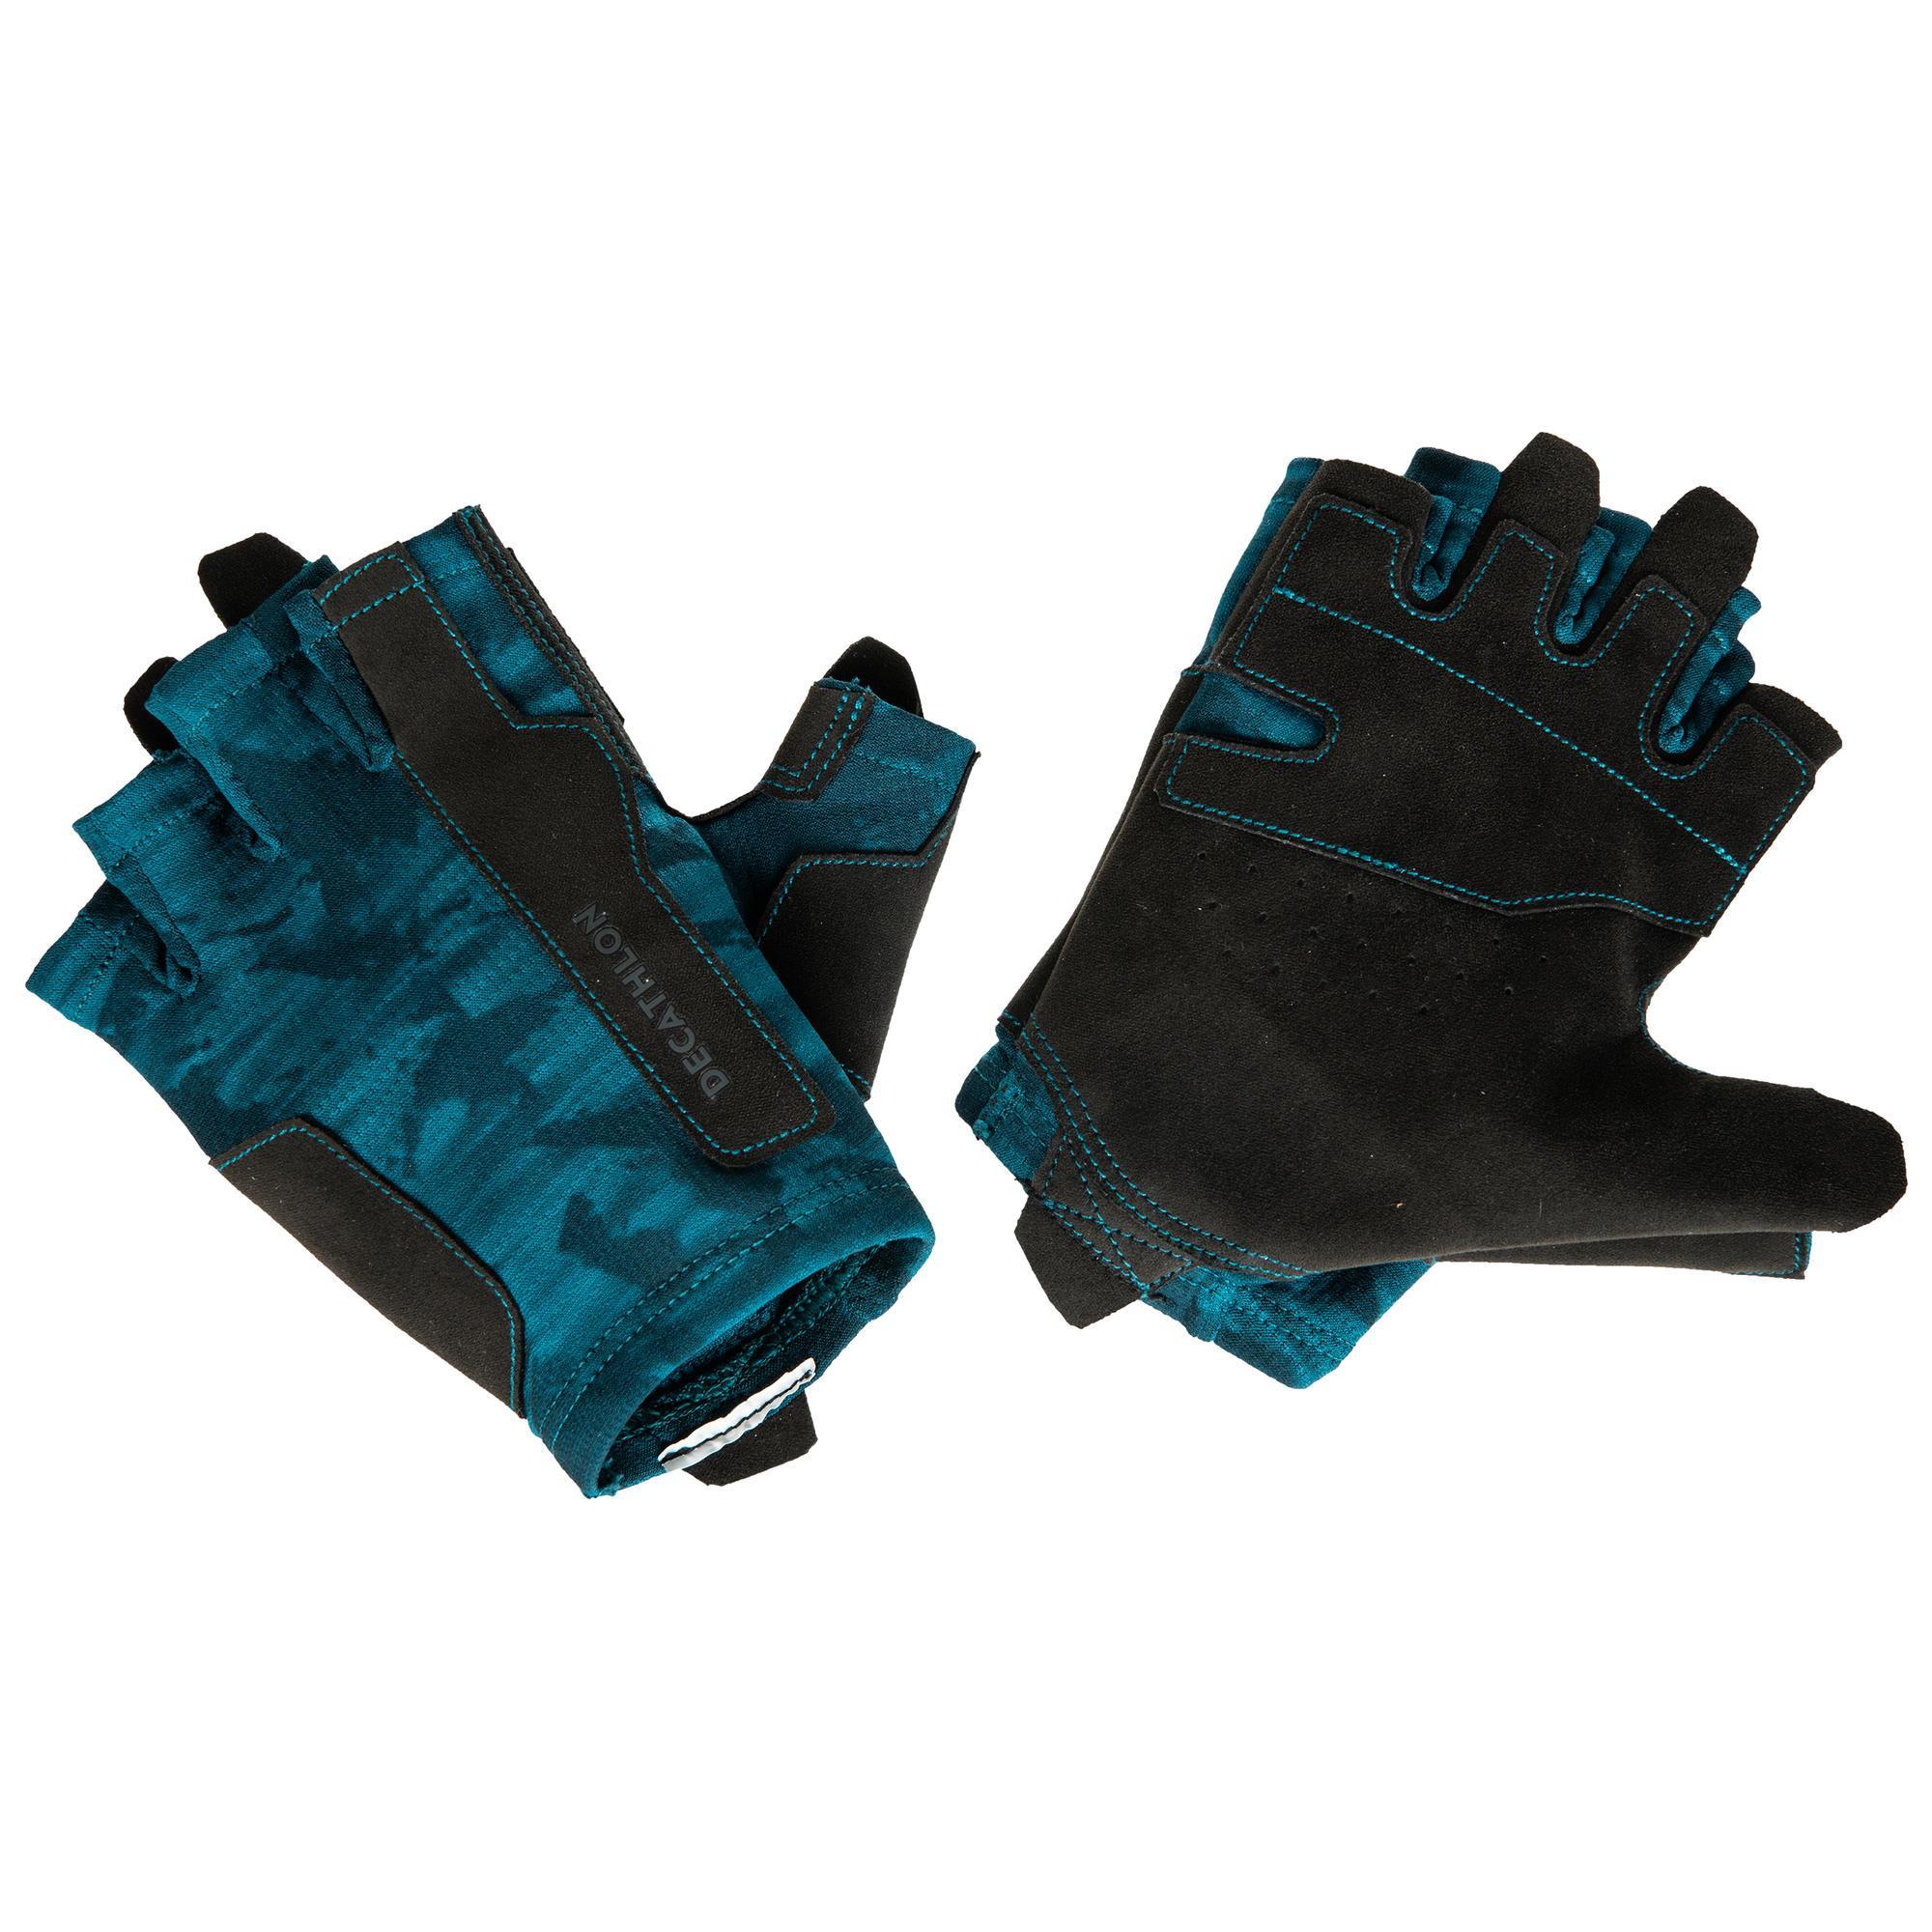 Weight Training Glove - Blue DOMYOS 